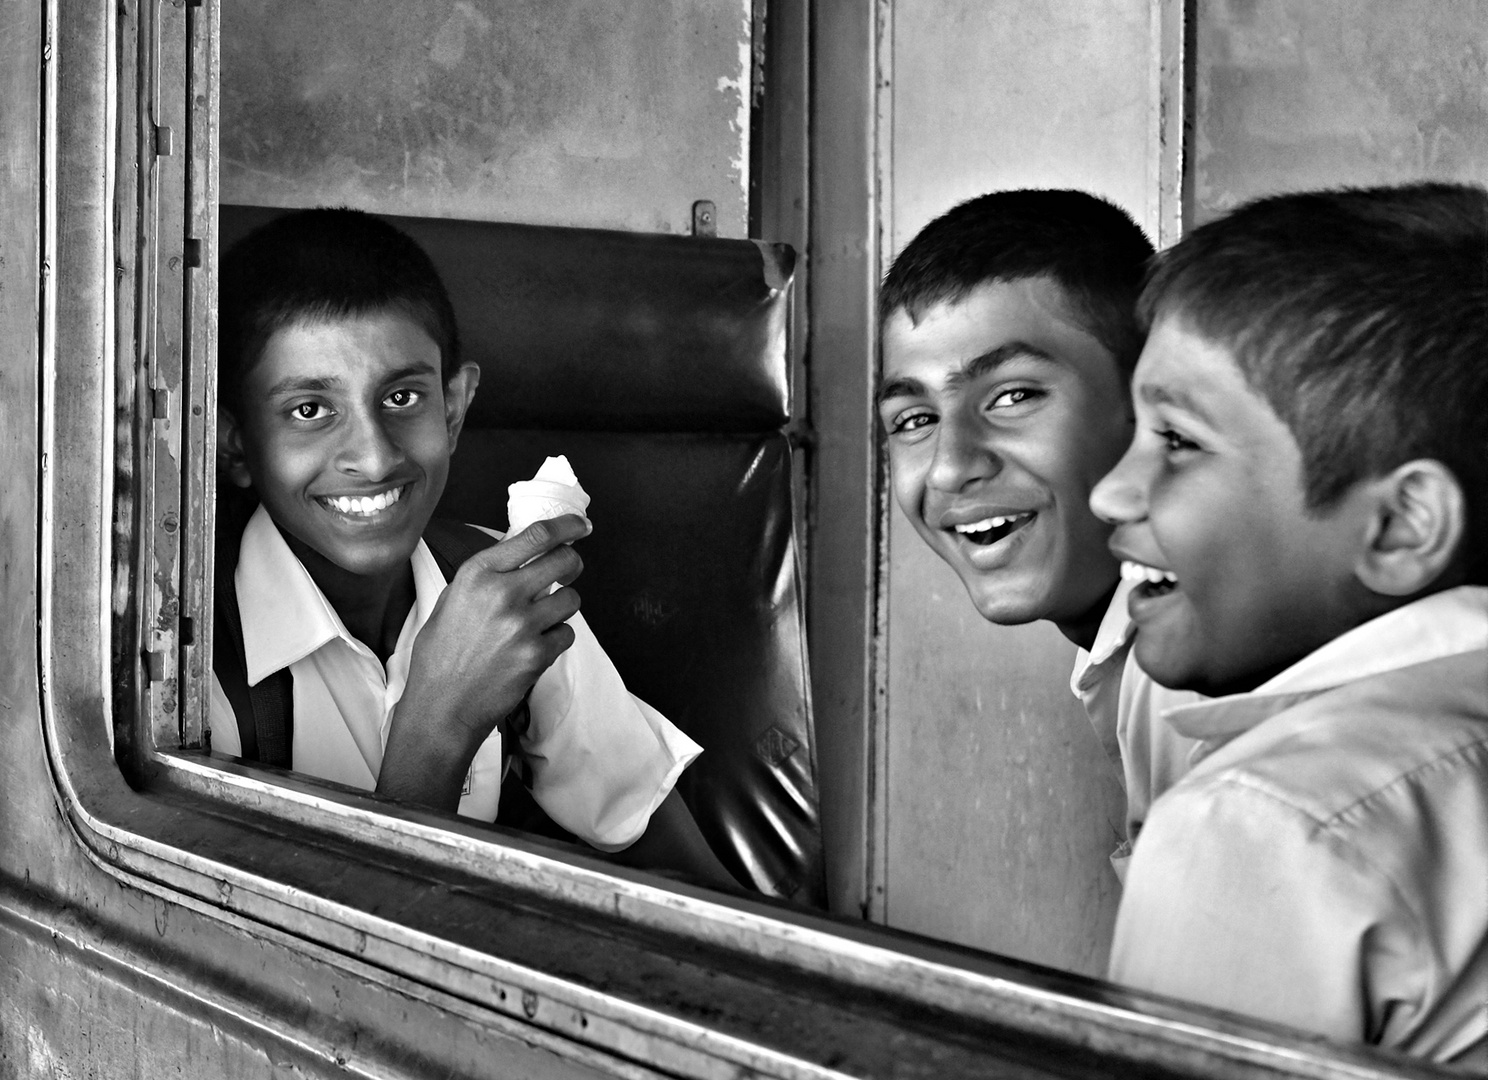 Schoolboys, Sri Lanka 2017